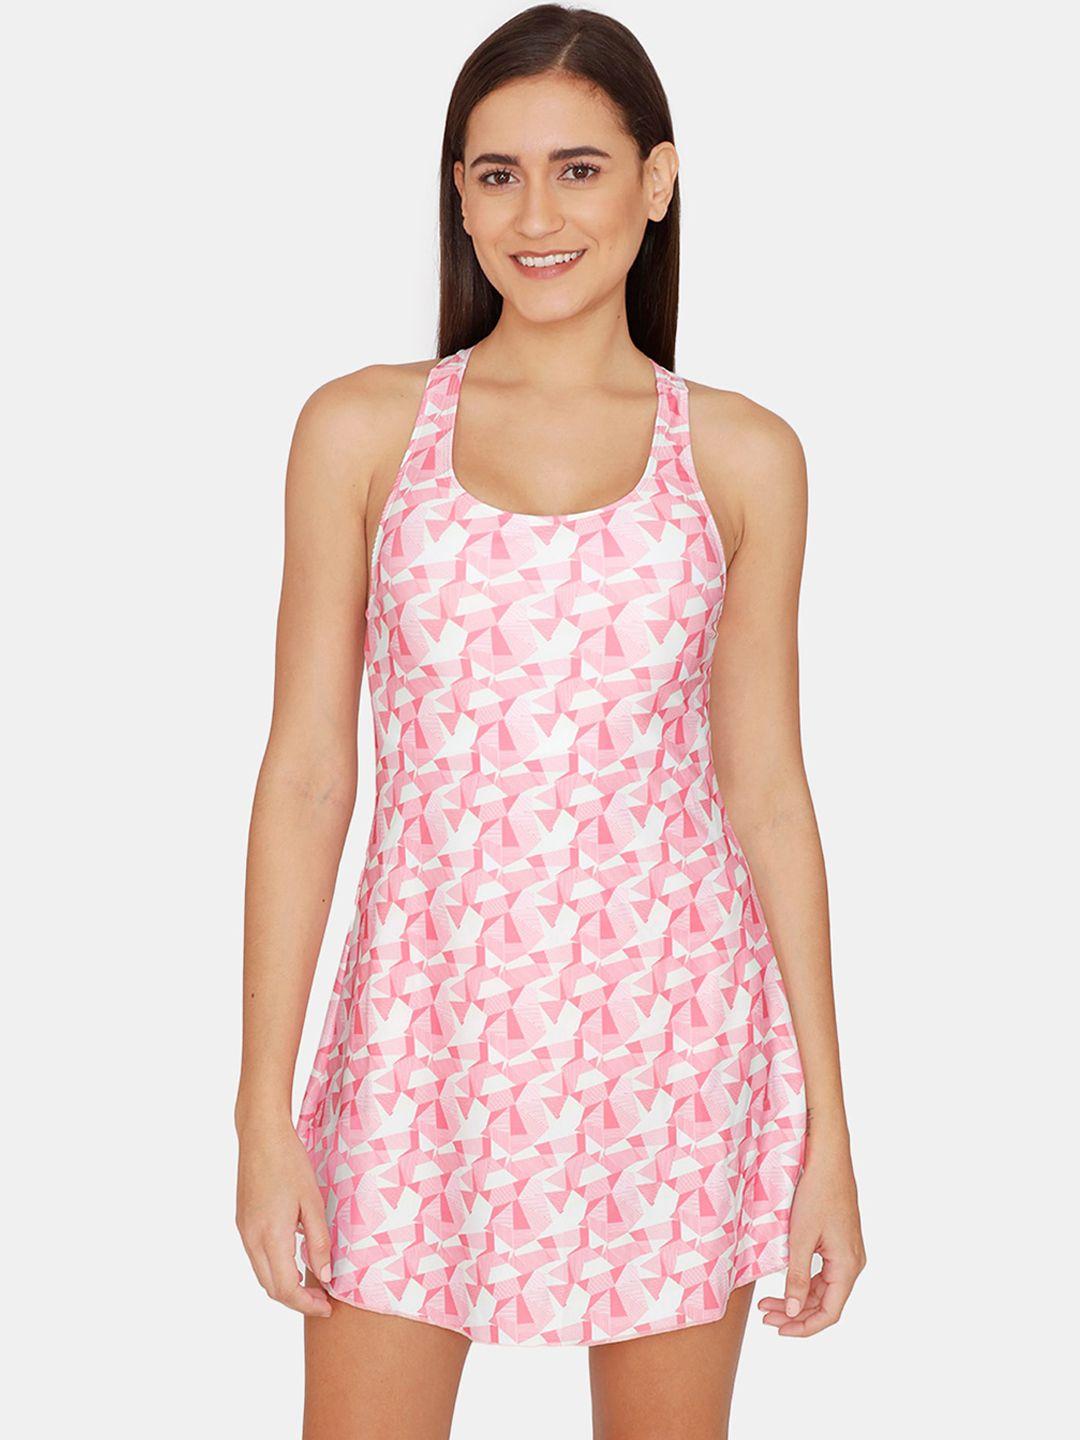 zelocity by zivame women pink & white geometric printed swimming dress